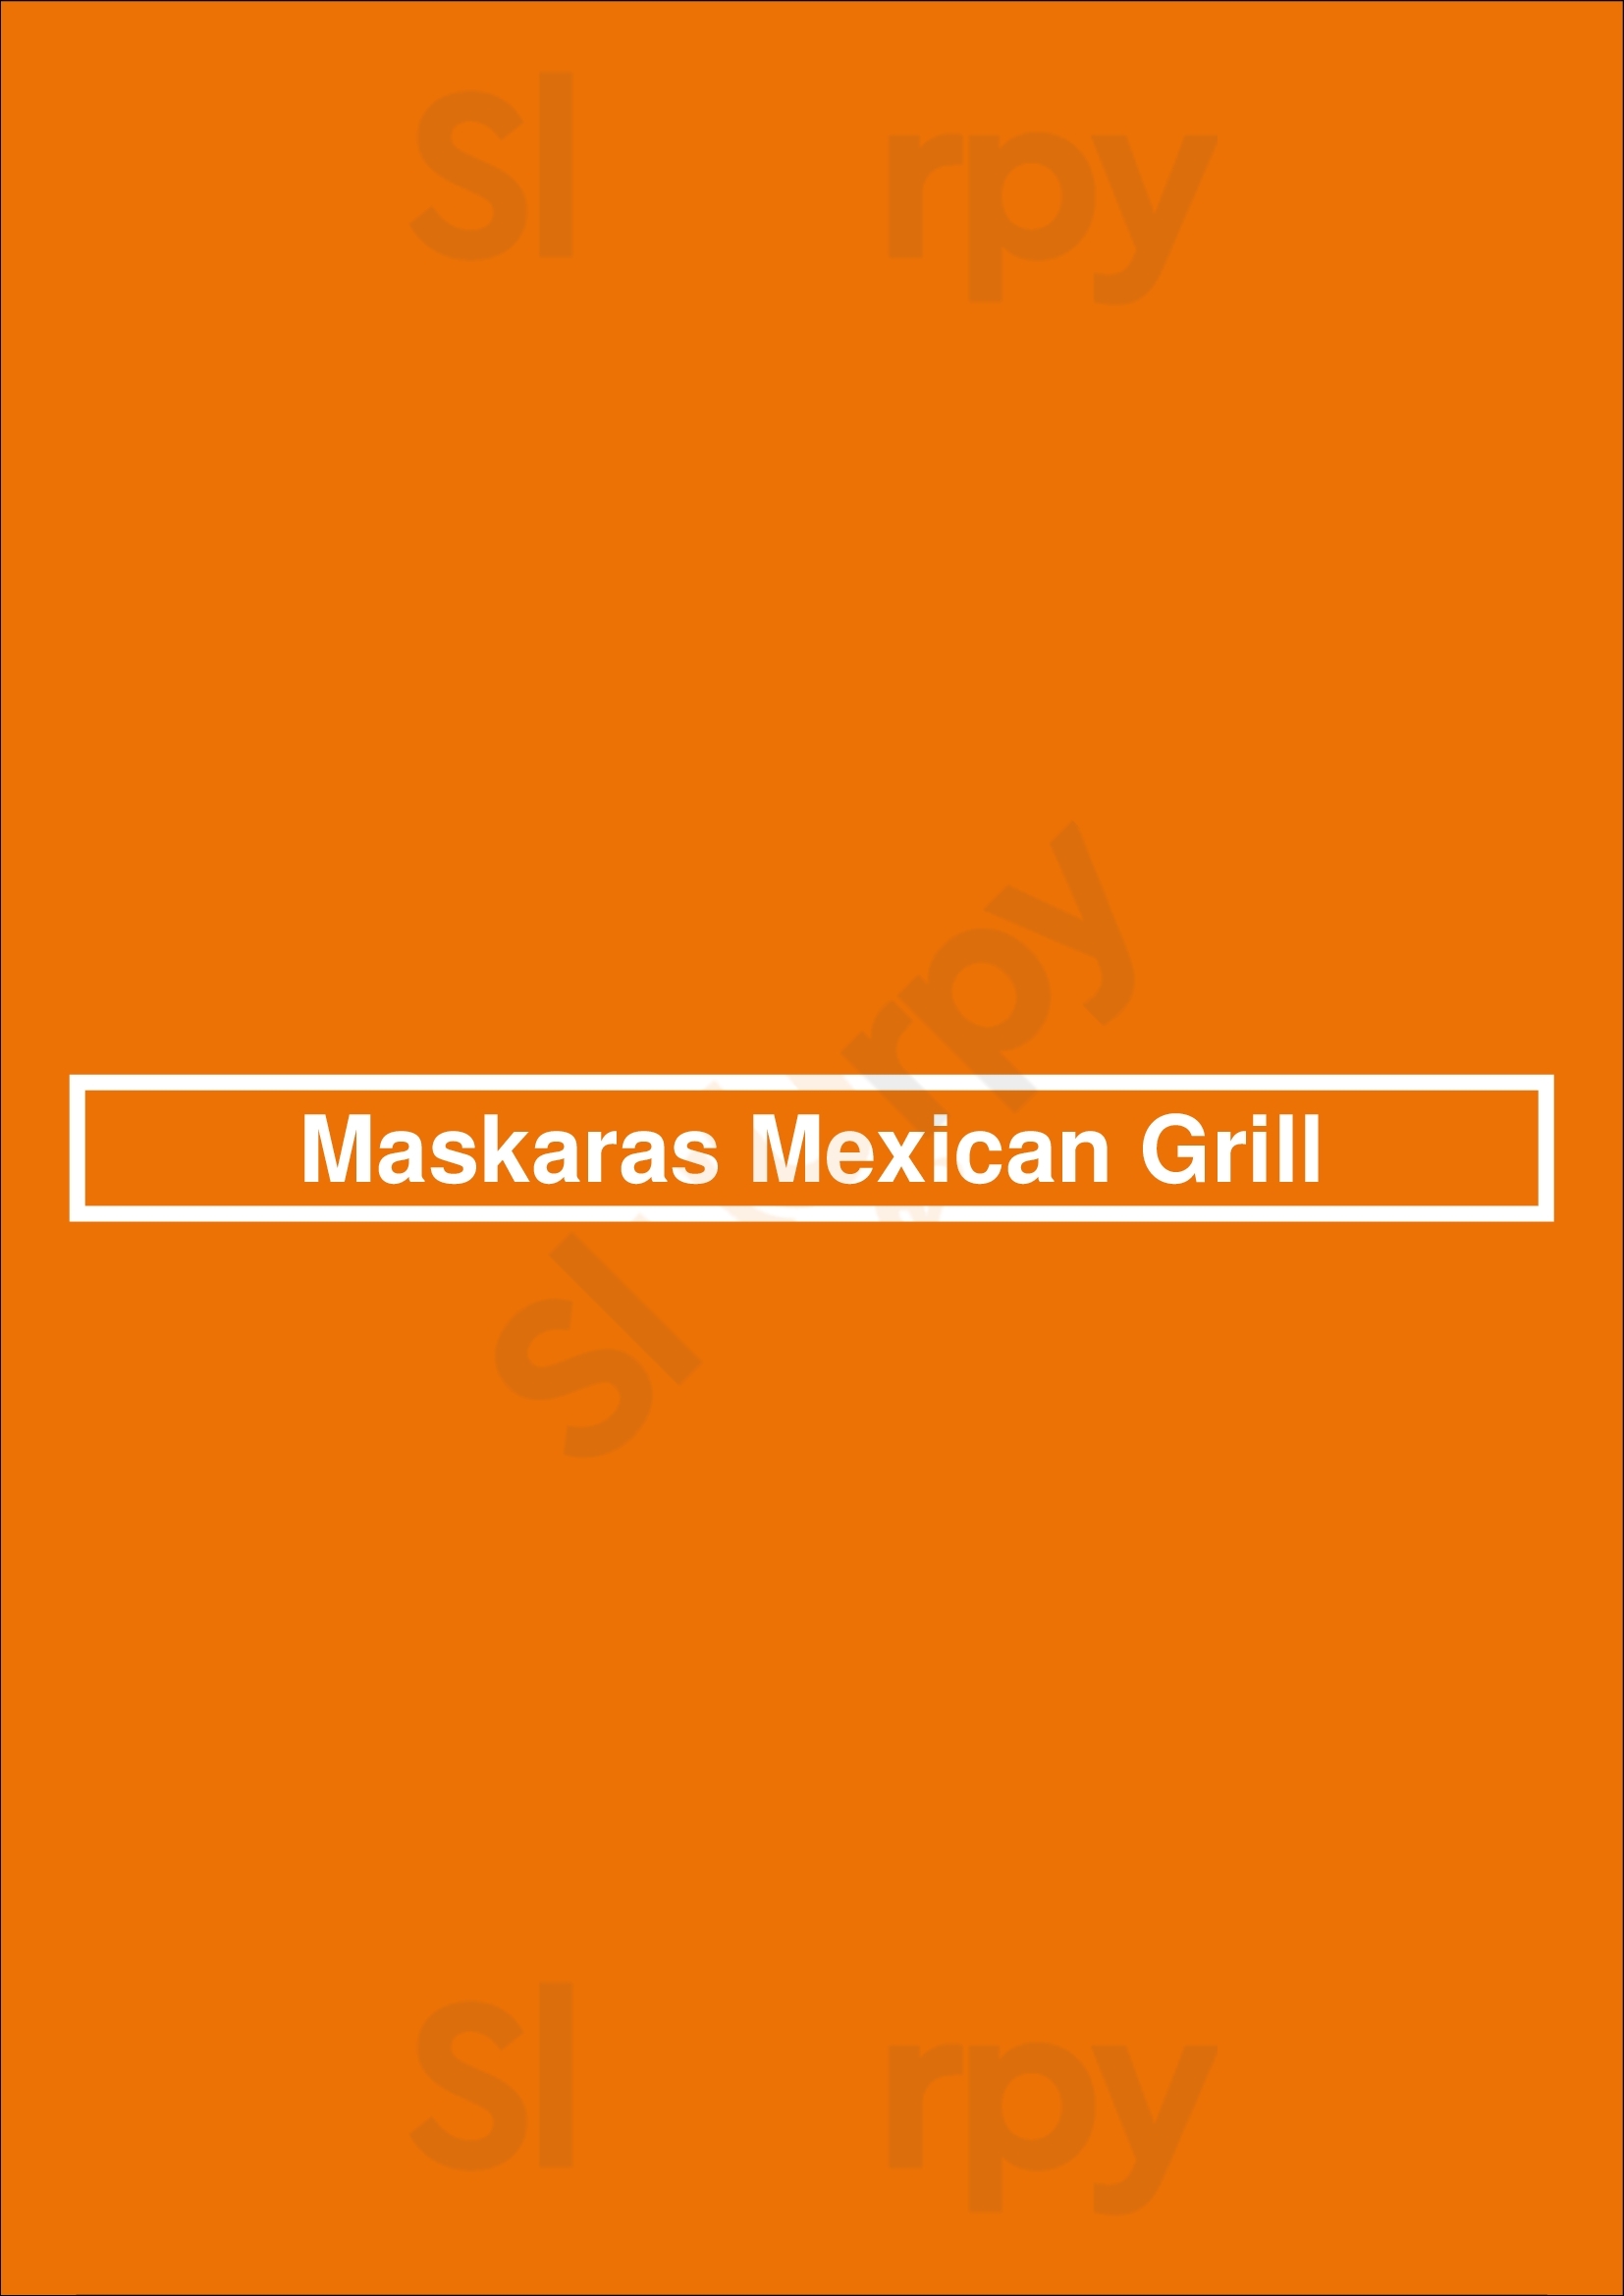 Maskaras Mexican Grill Dallas Menu - 1